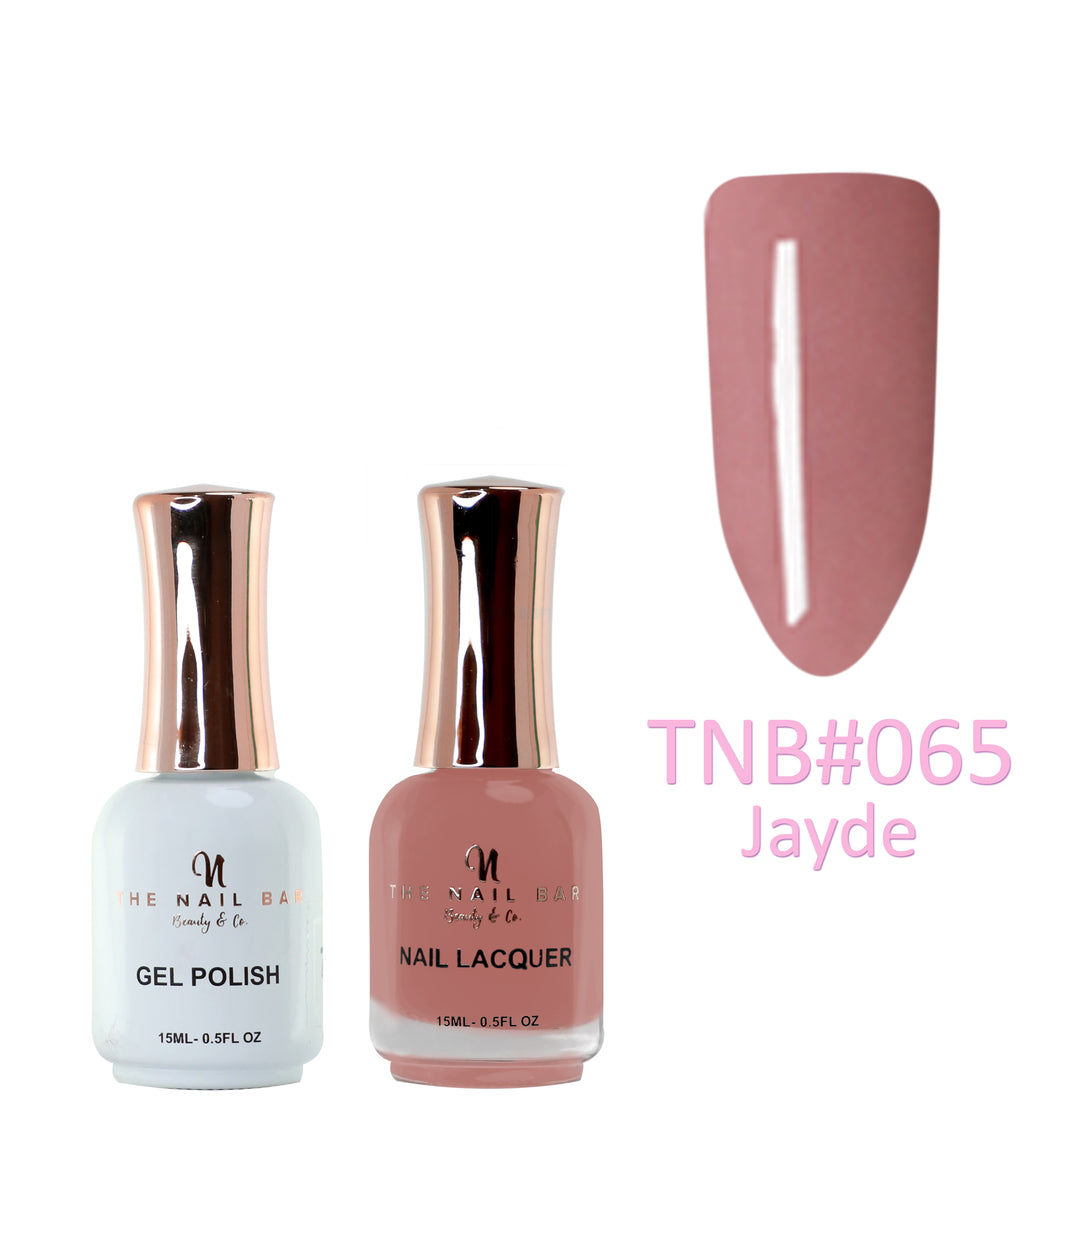 Dual Polish/Gel colour matching (15ml) - Jayde - The Nail Bar Beauty & Co.